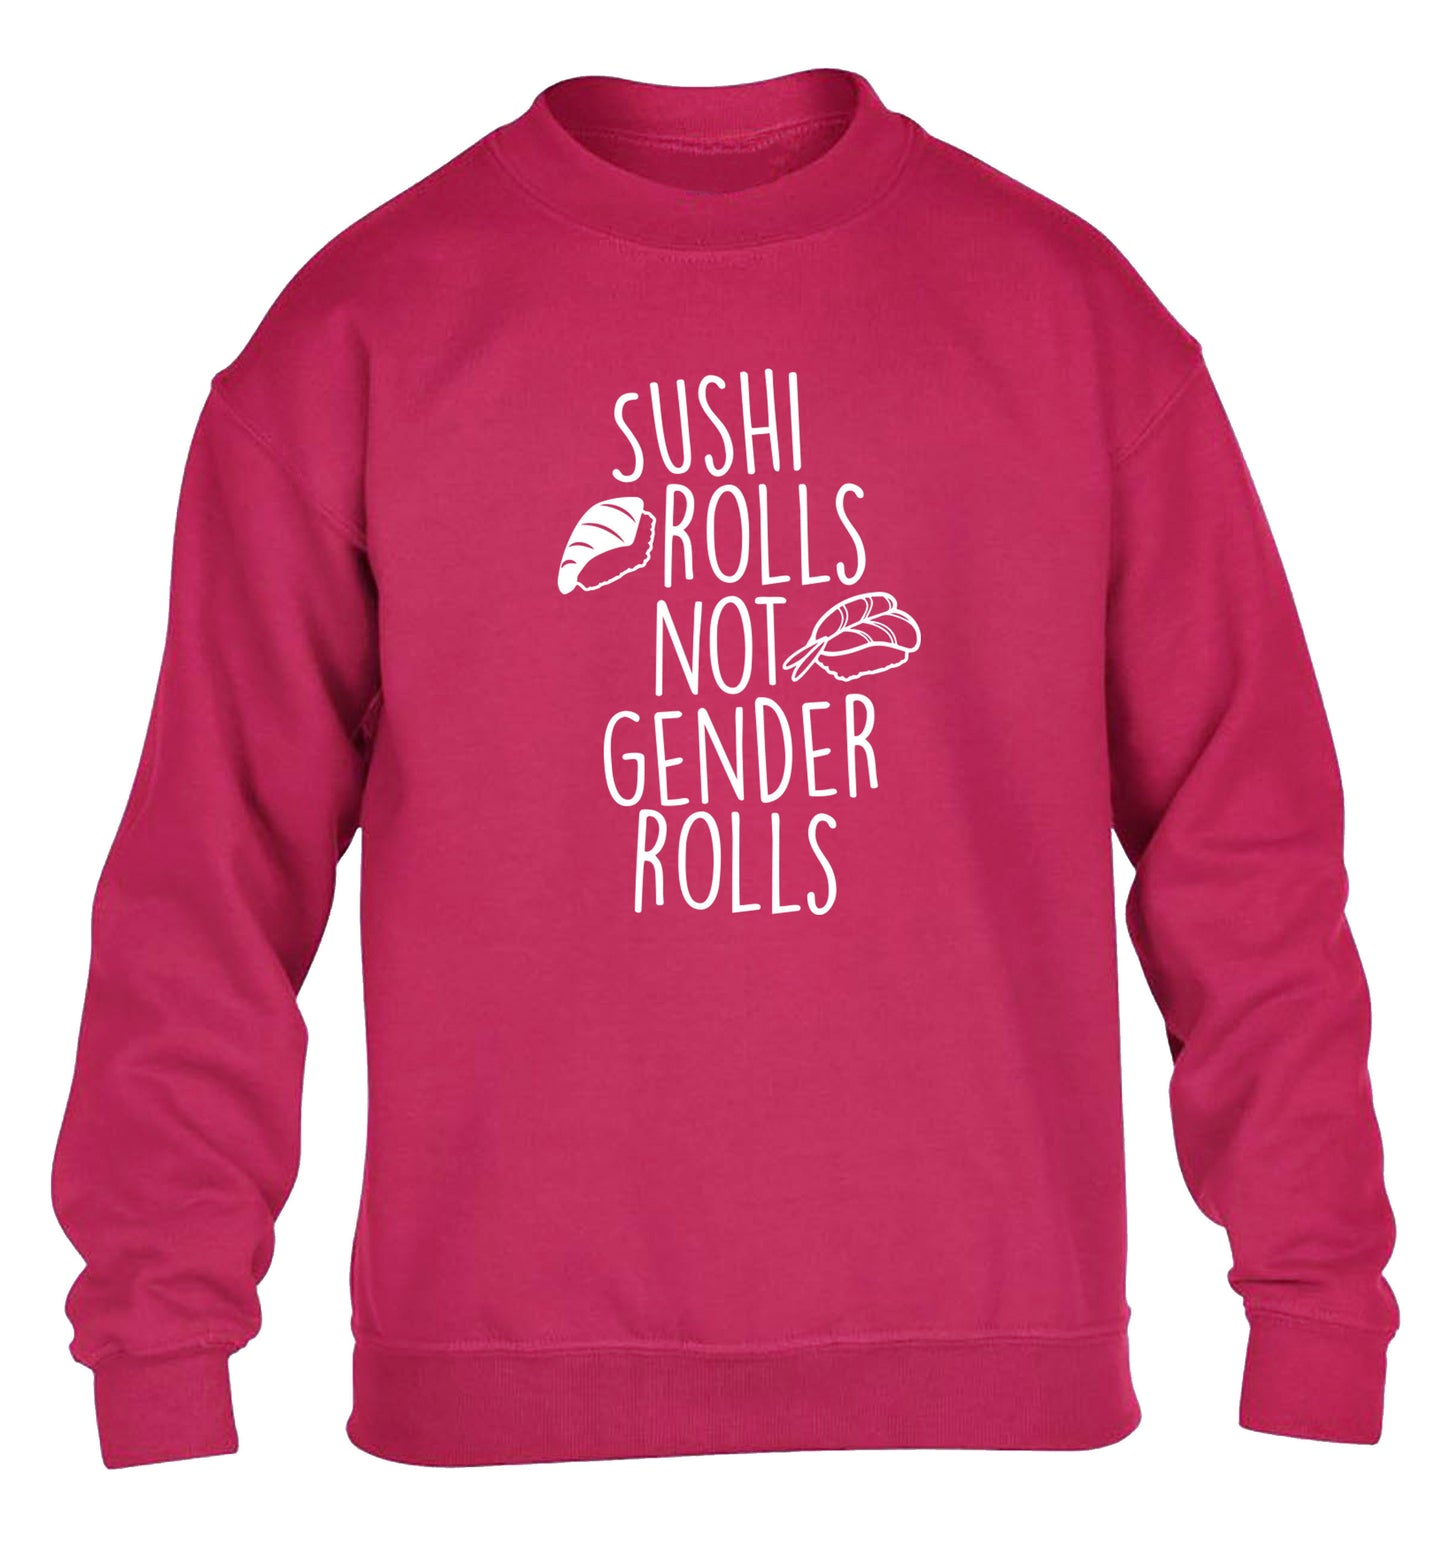 Sushi rolls not gender rolls children's pink sweater 12-14 Years